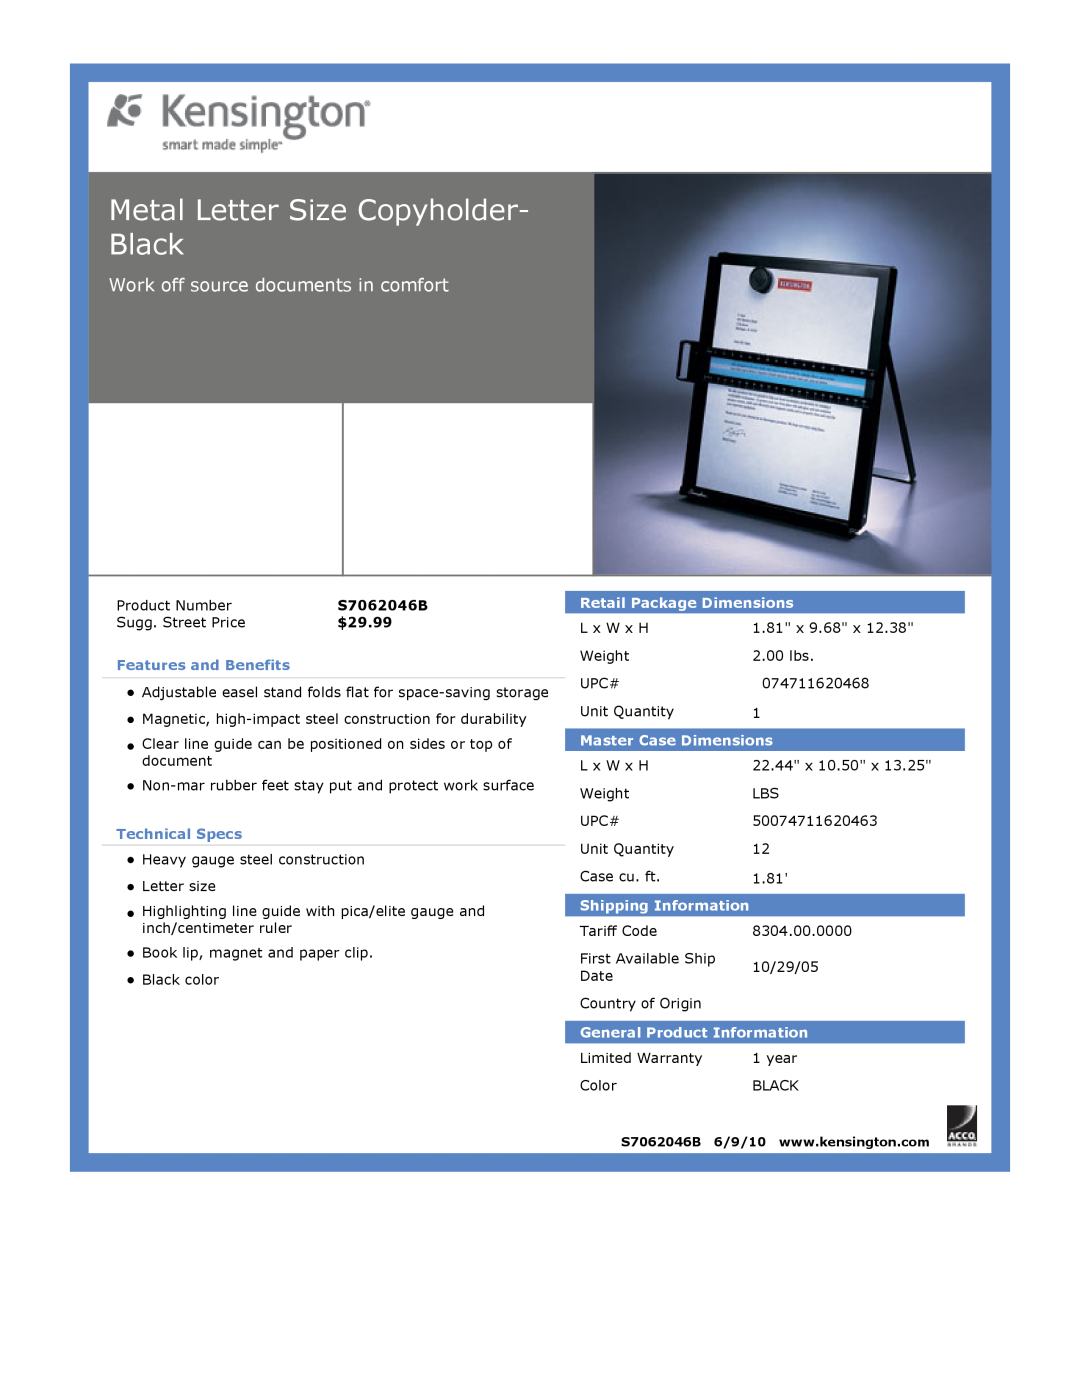 Kensington EU64325 Metal Letter Size Copyholder- Black, Work off source documents in comfort, $29.99, Technical Specs 